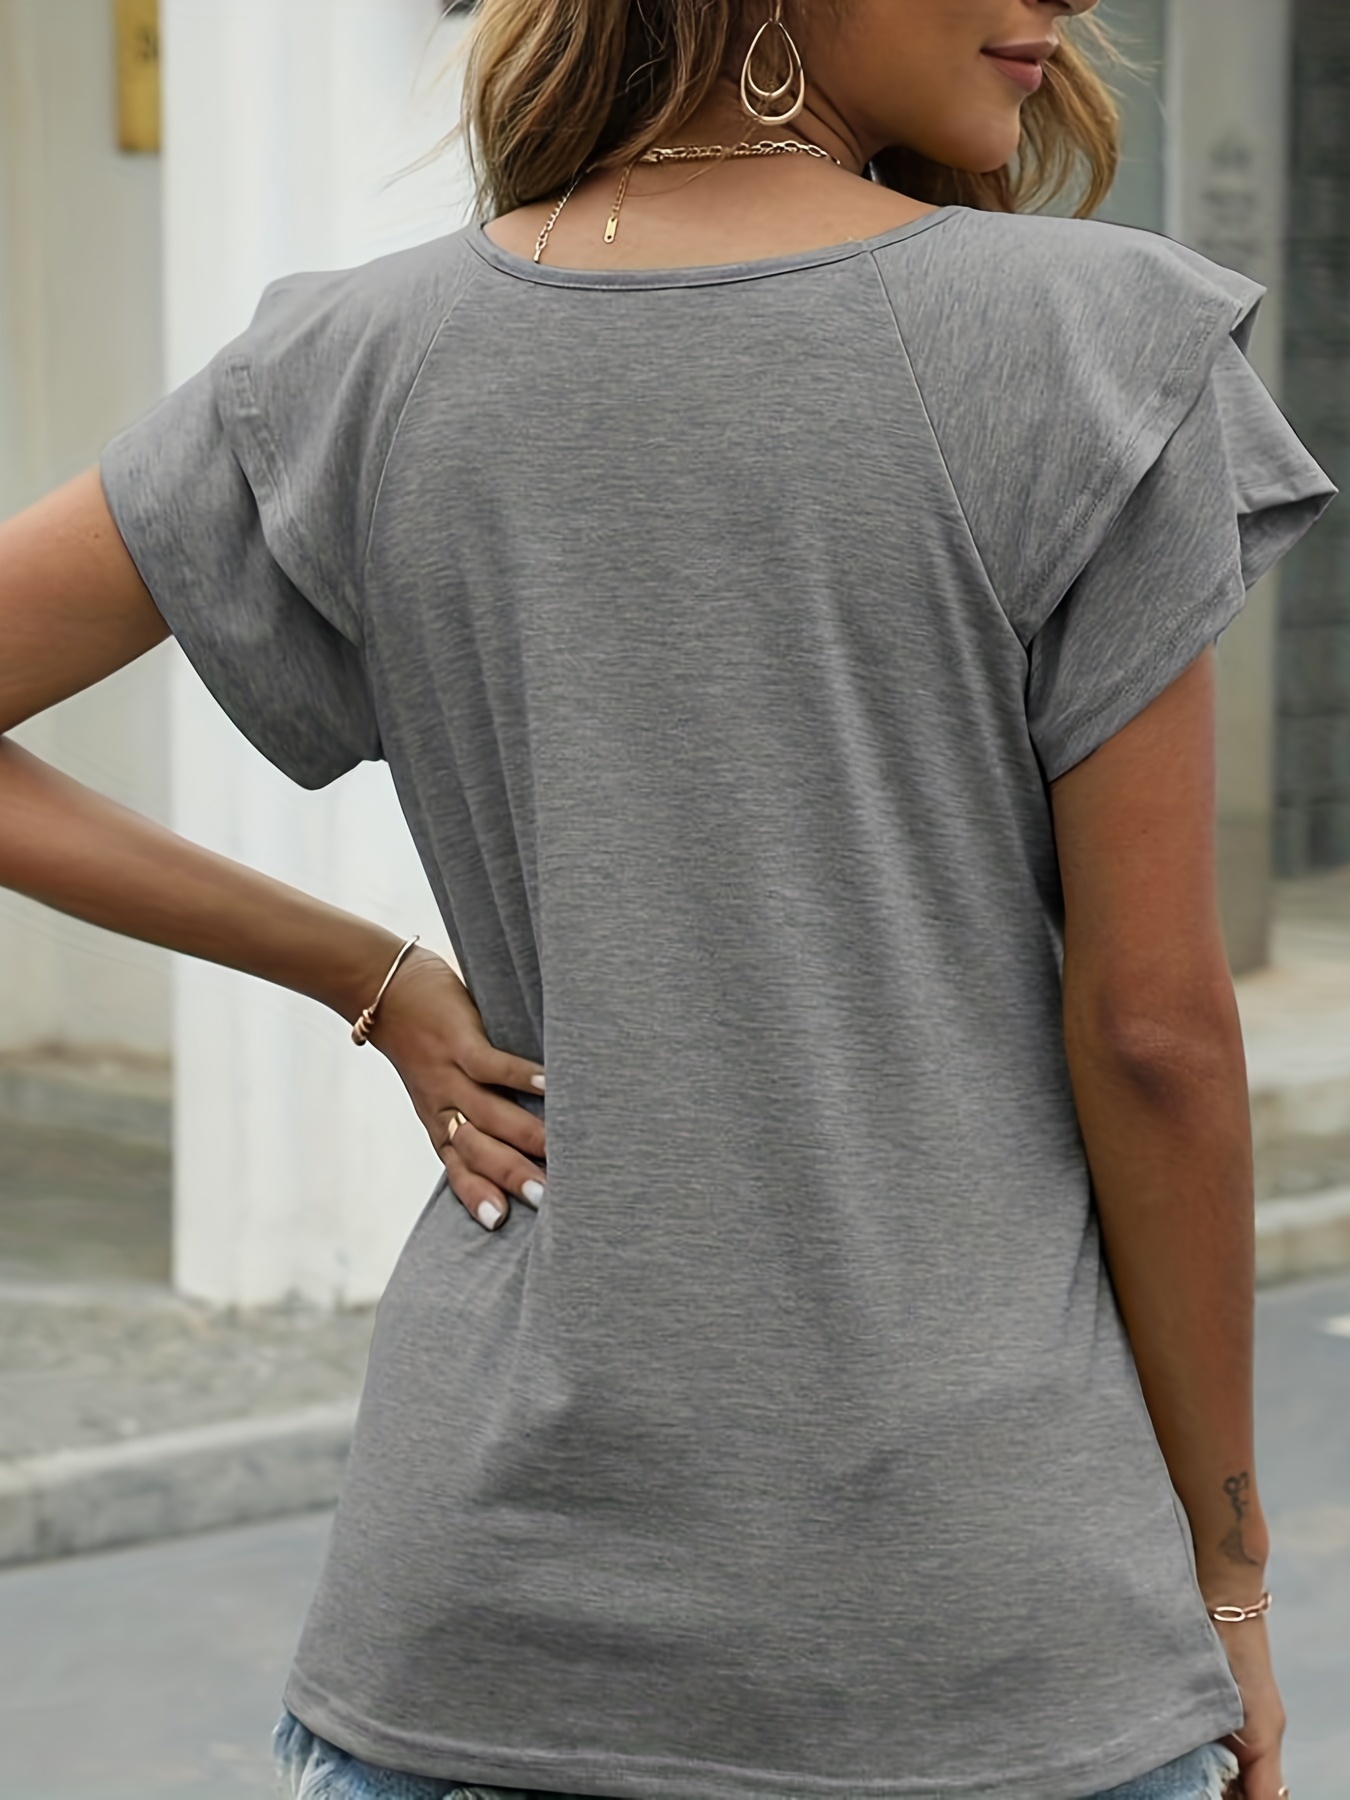 RYRJJ Womens Summer Casual T-Shirts V Neck Ruffle Short Sleeve